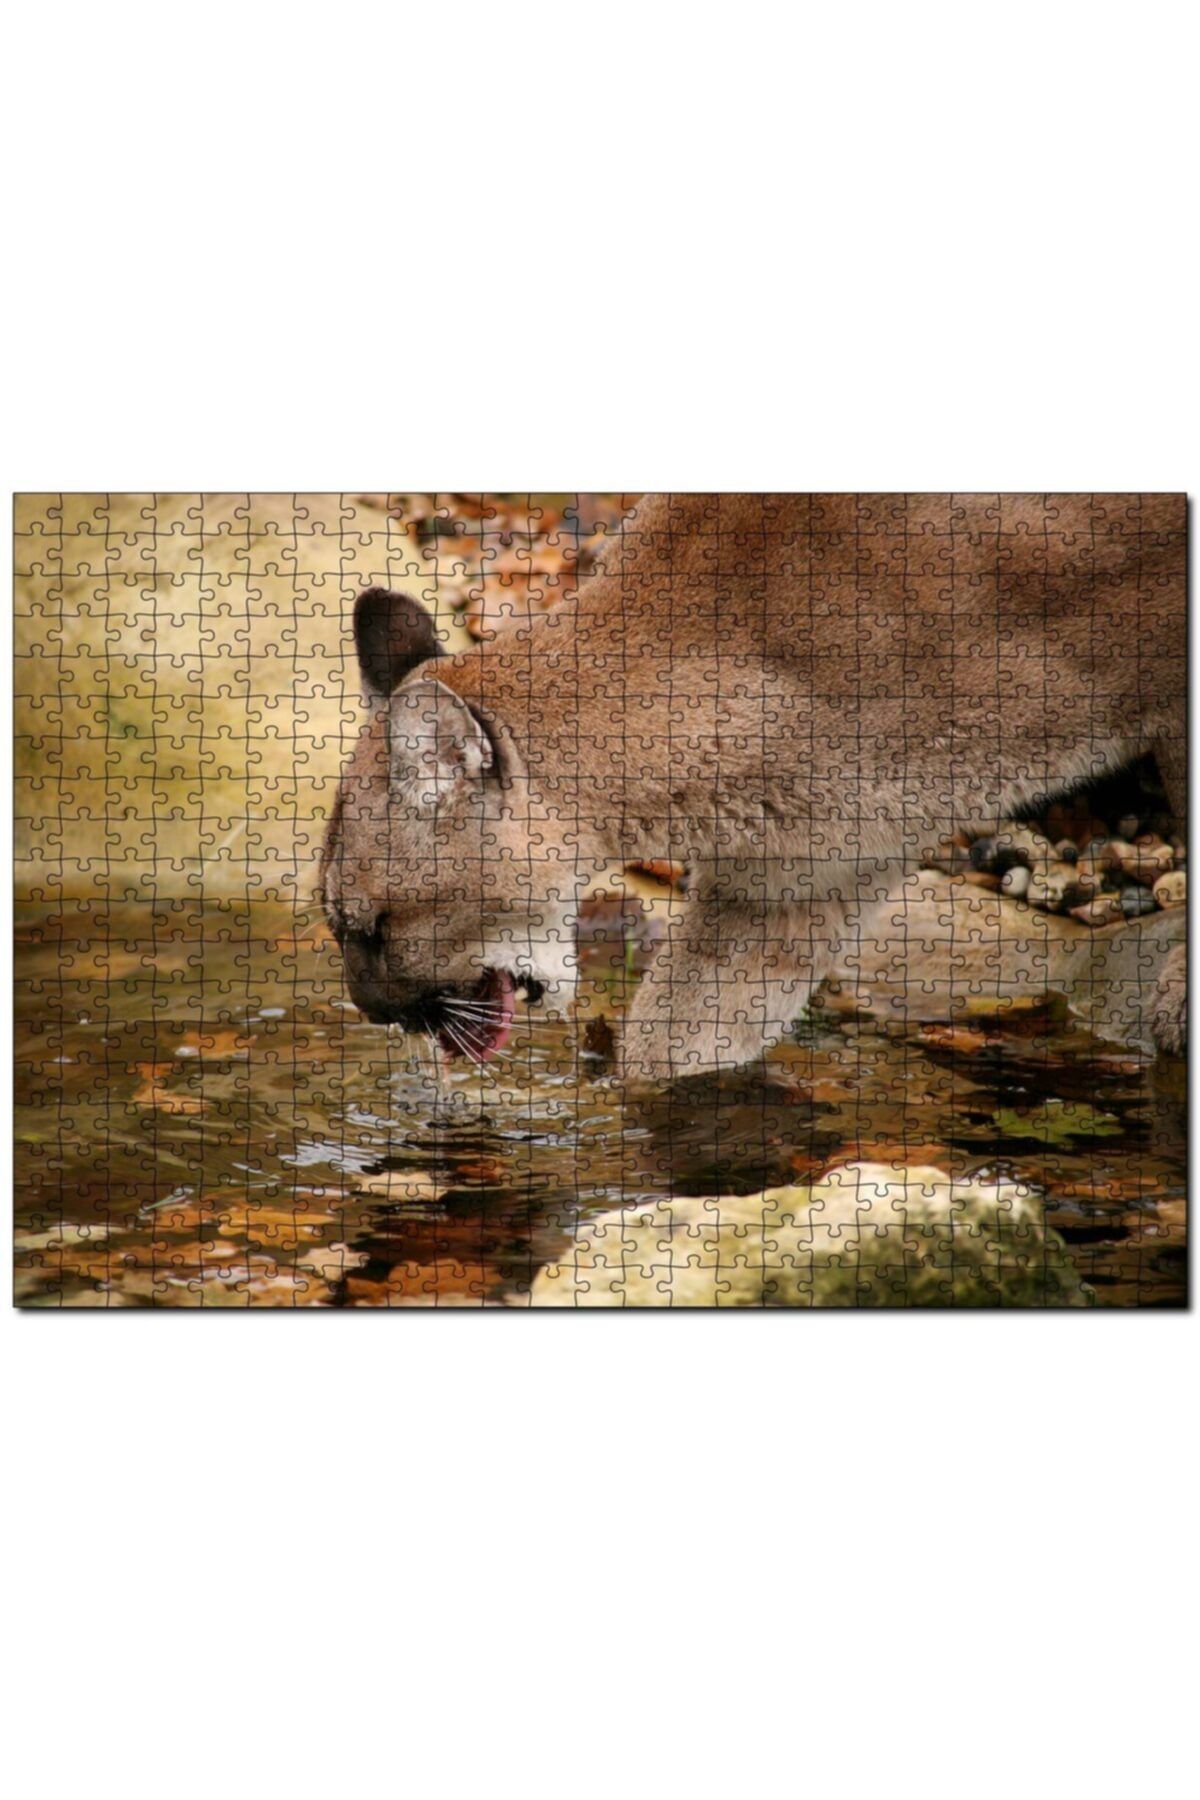 Cakapuzzle Ormandaki Puma Derede Su Içerken Görseli 1000 Parça Puzzle Yapboz Mdf(ahşap)